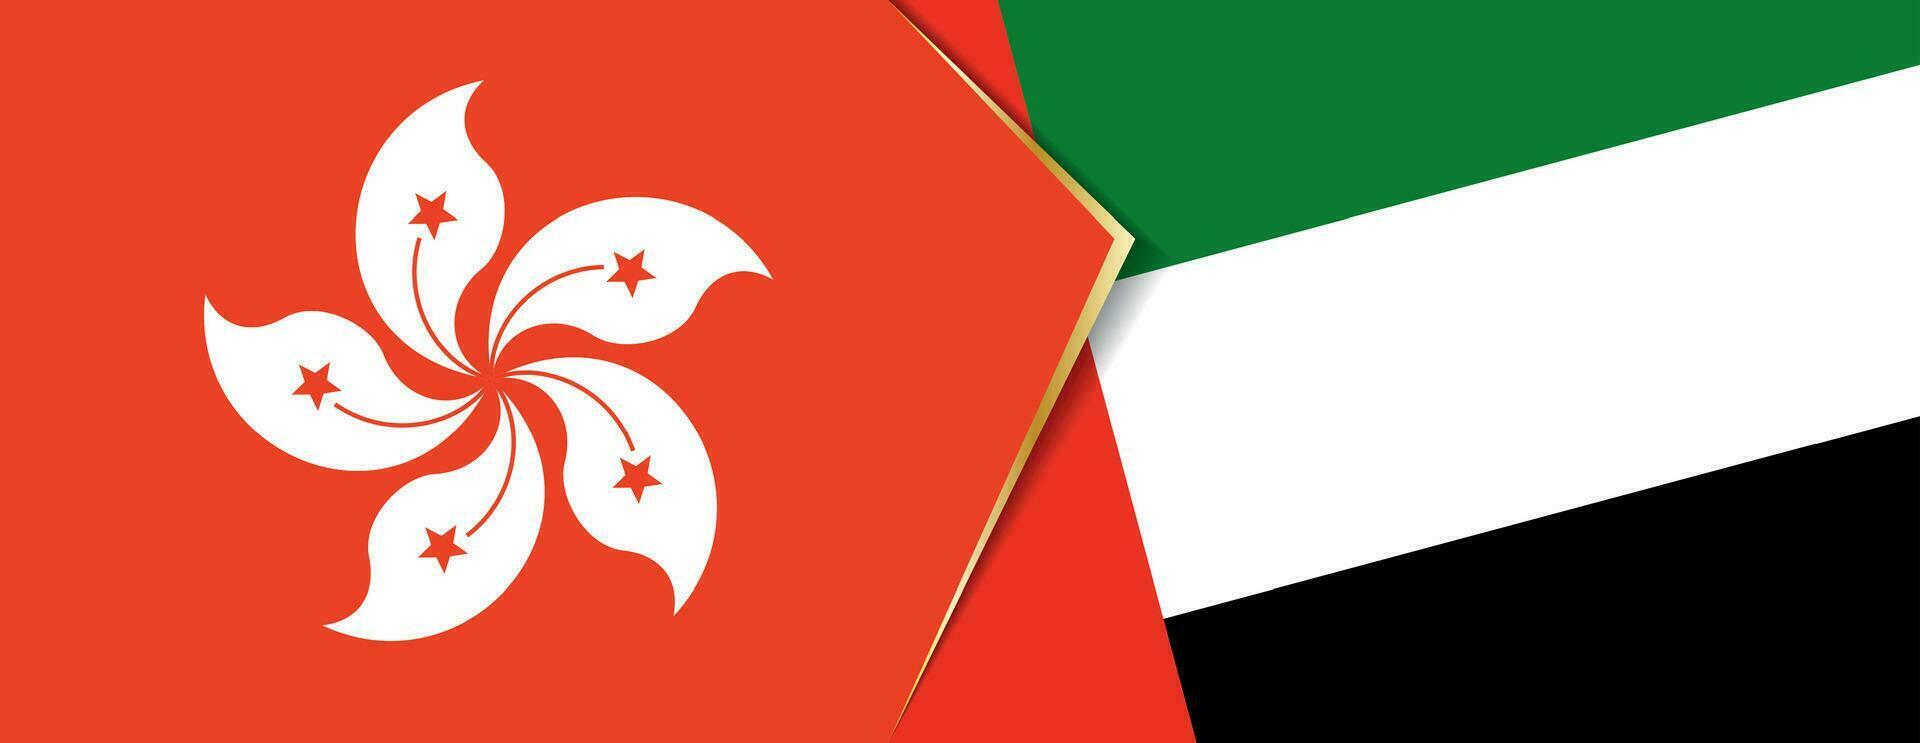 hong kong e unito arabo Emirates bandiere, Due vettore bandiere.